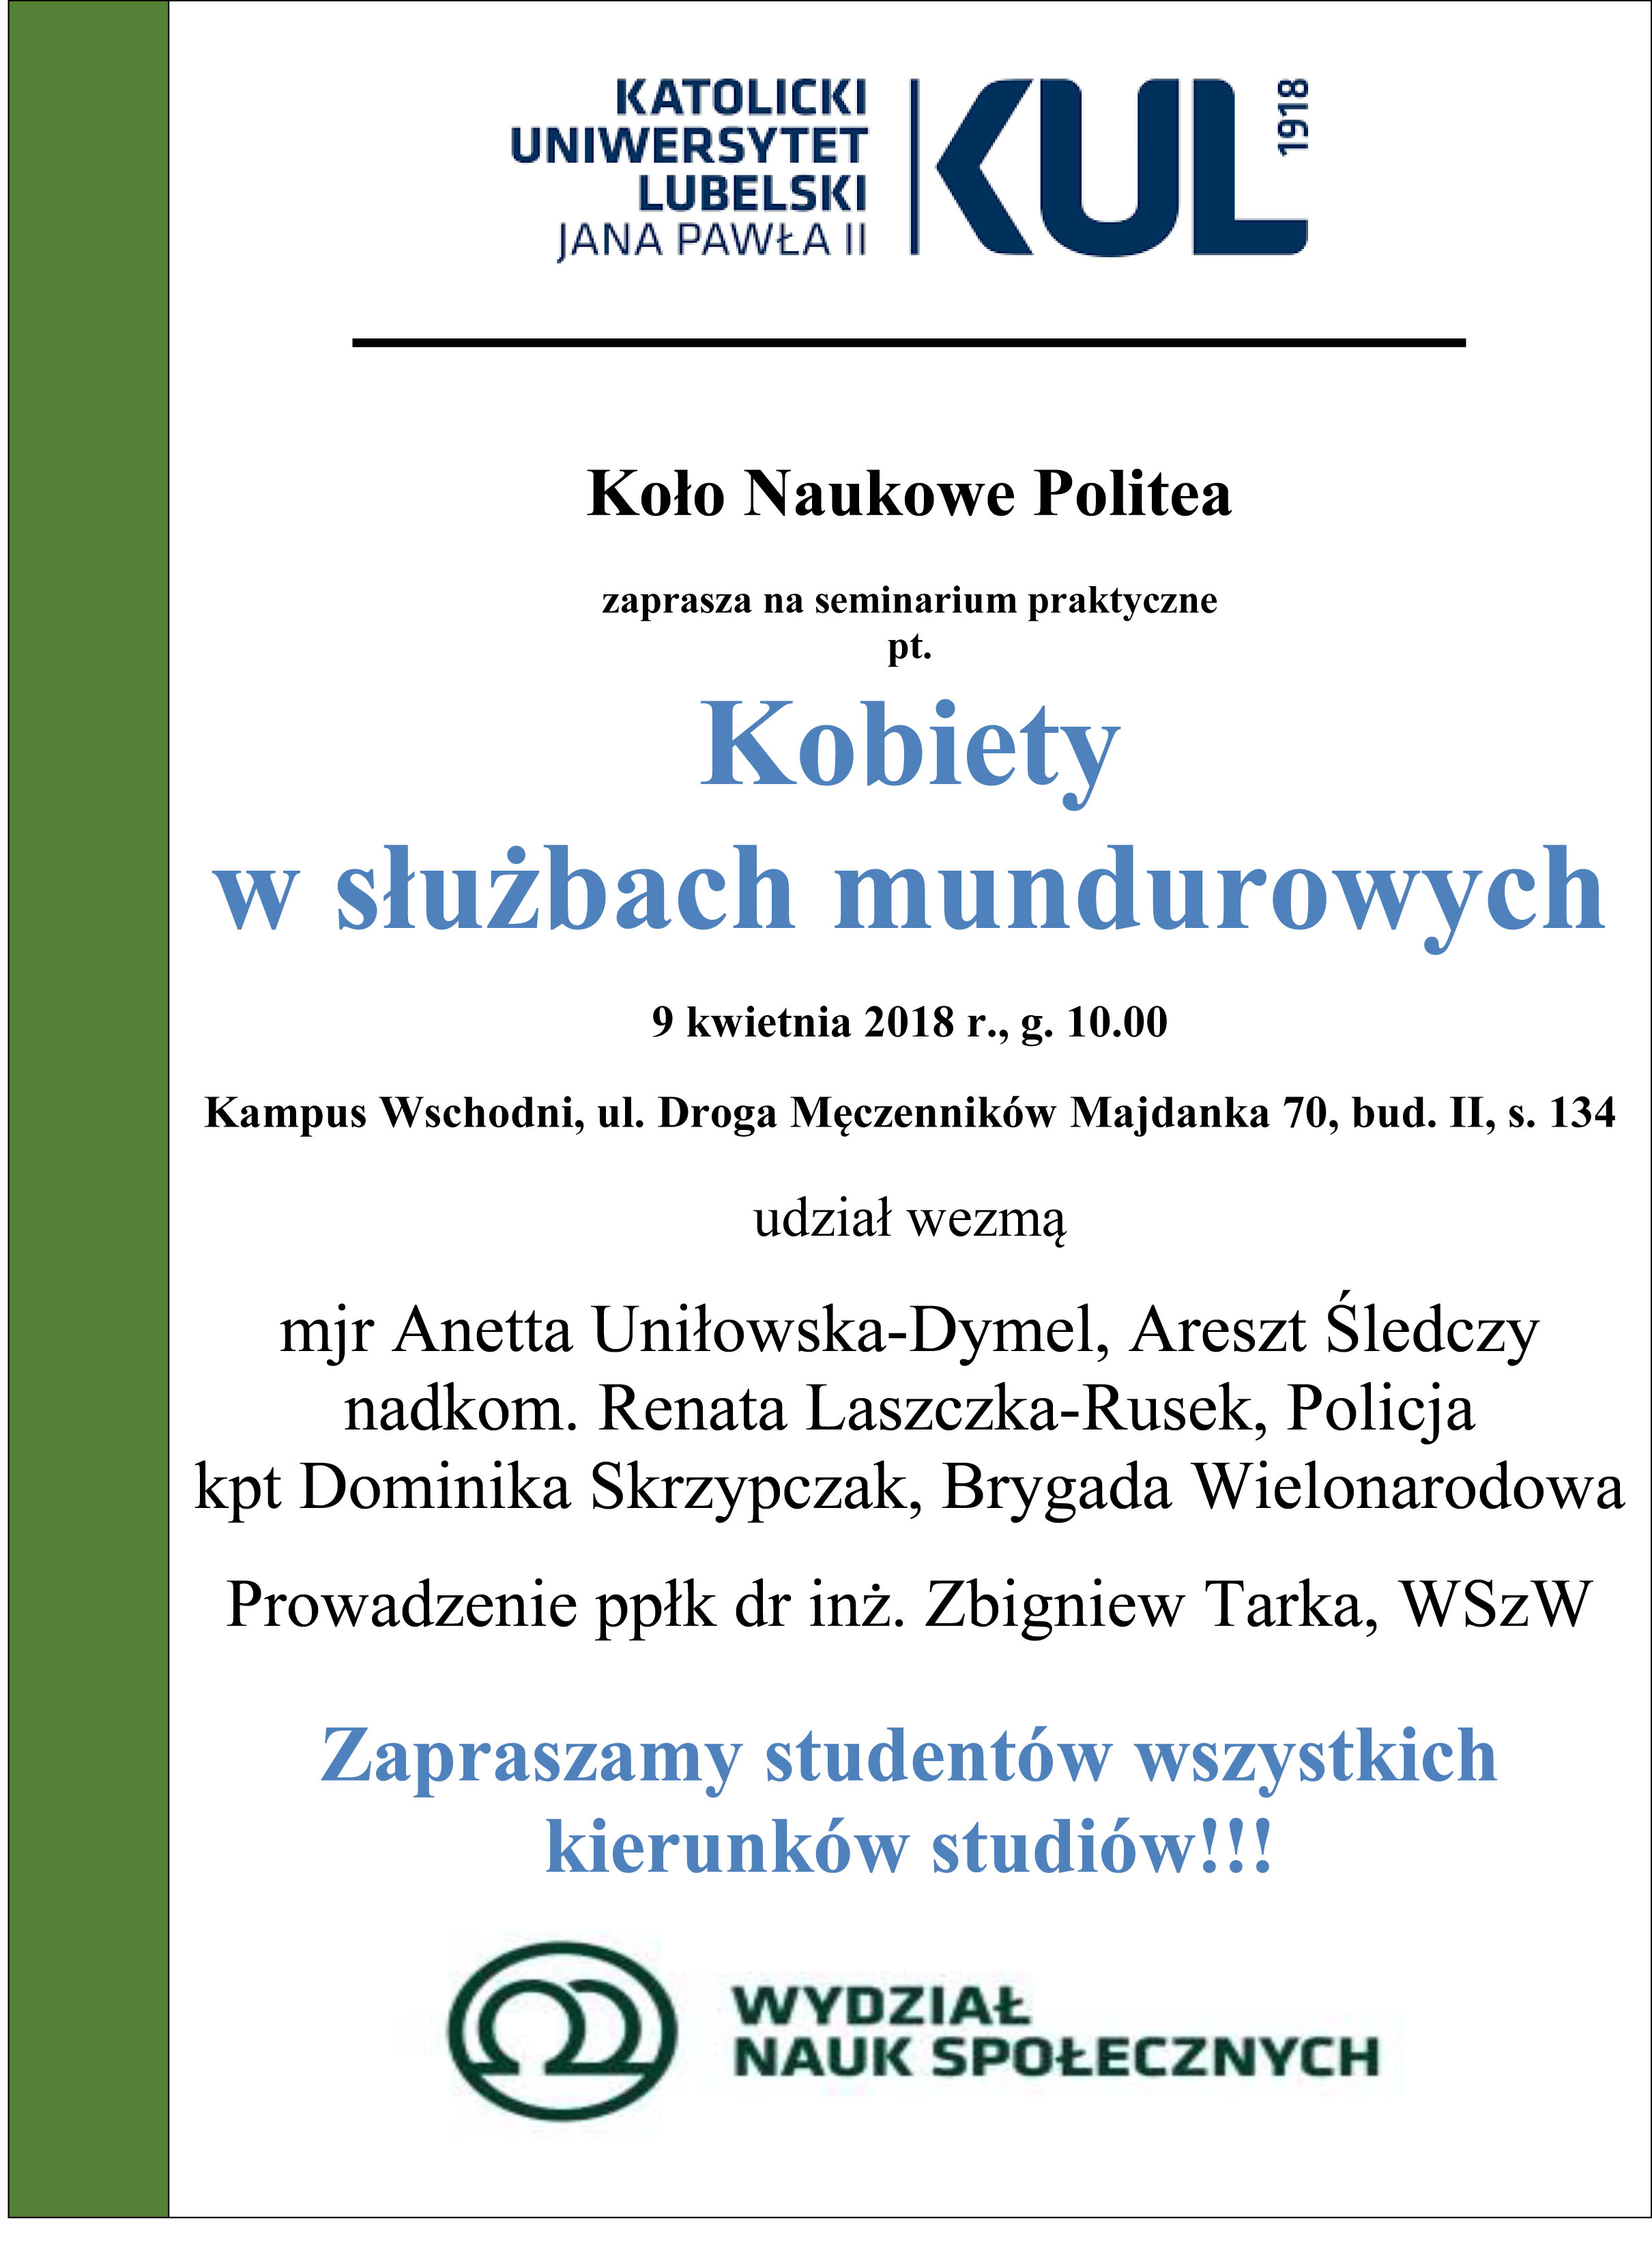 https://www.kul.pl/files/075/plakaty/2018/spotkania_wykady/plakat_kwsm_2018.jpg?1522927823302